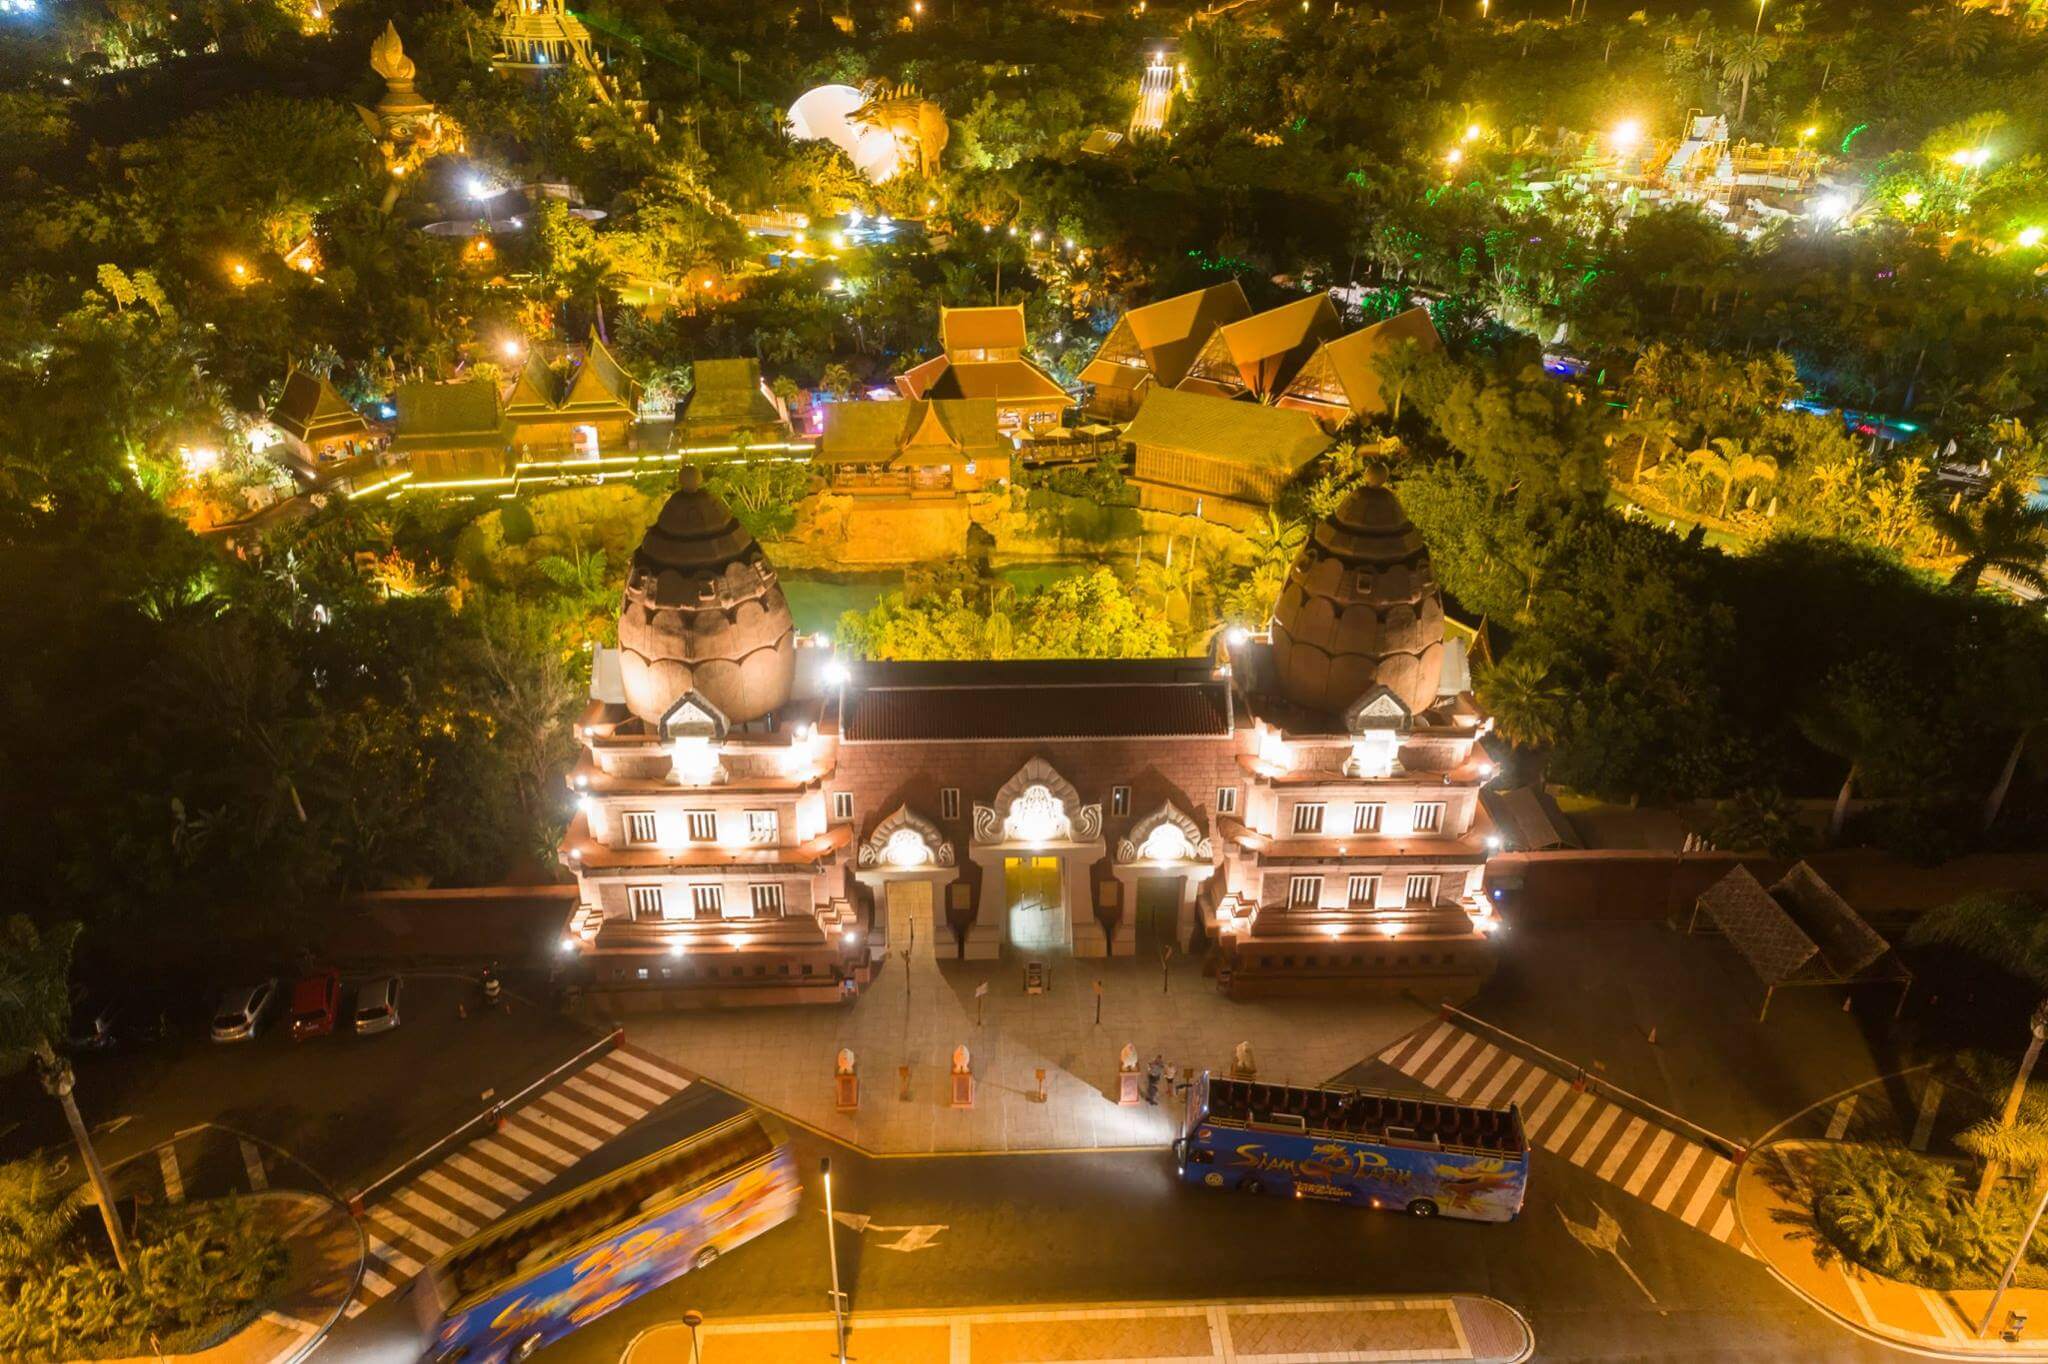 Siam Park at night